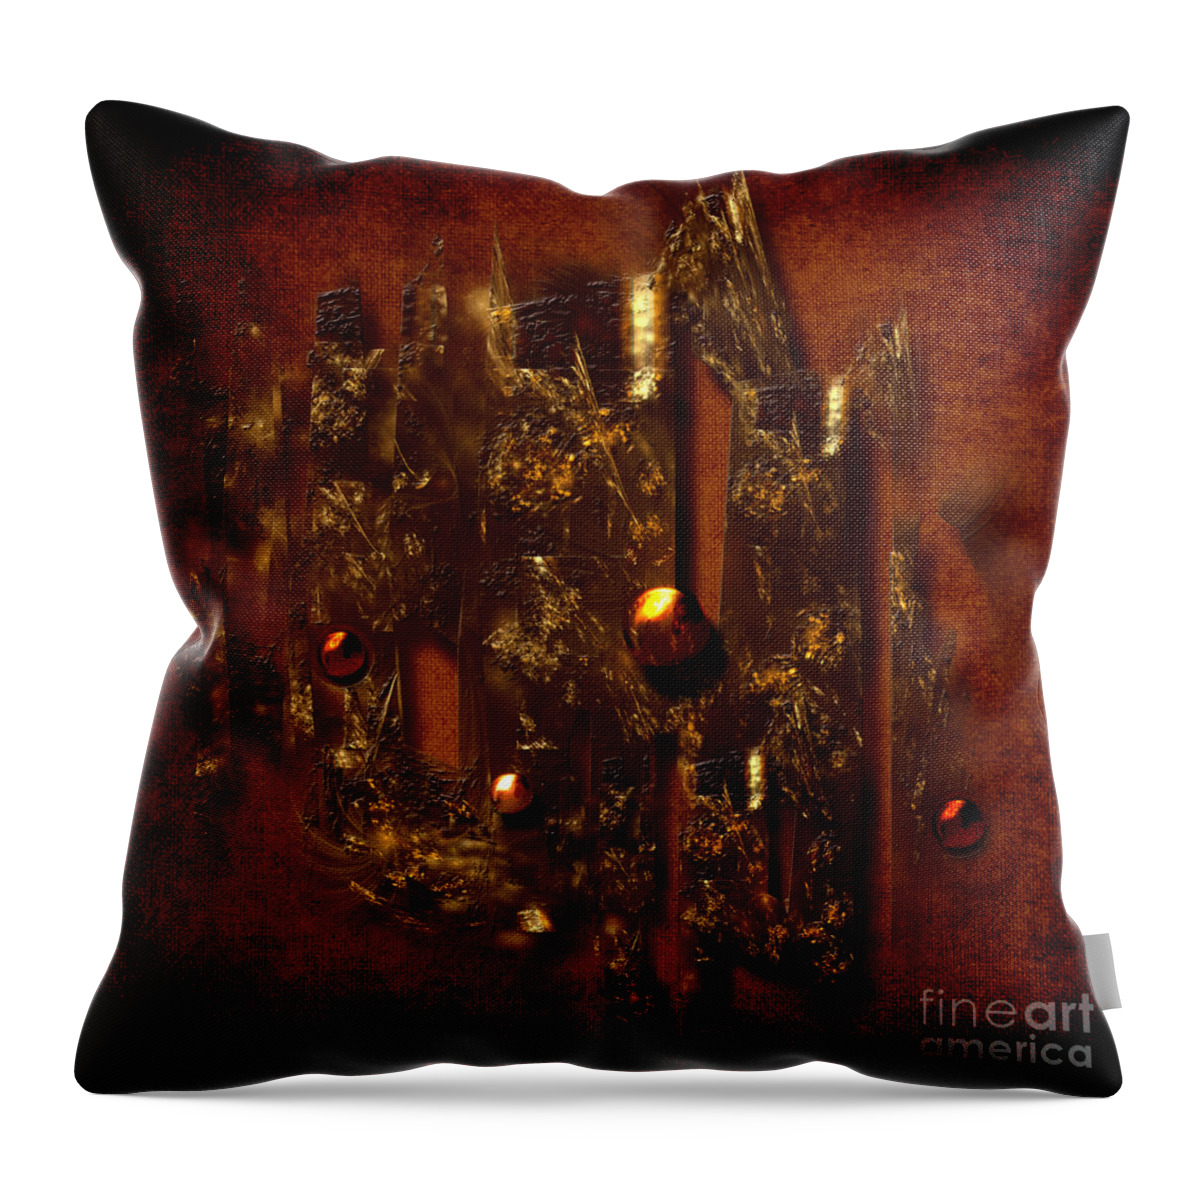 Gold Throw Pillow featuring the digital art Oldgold by Alexa Szlavics